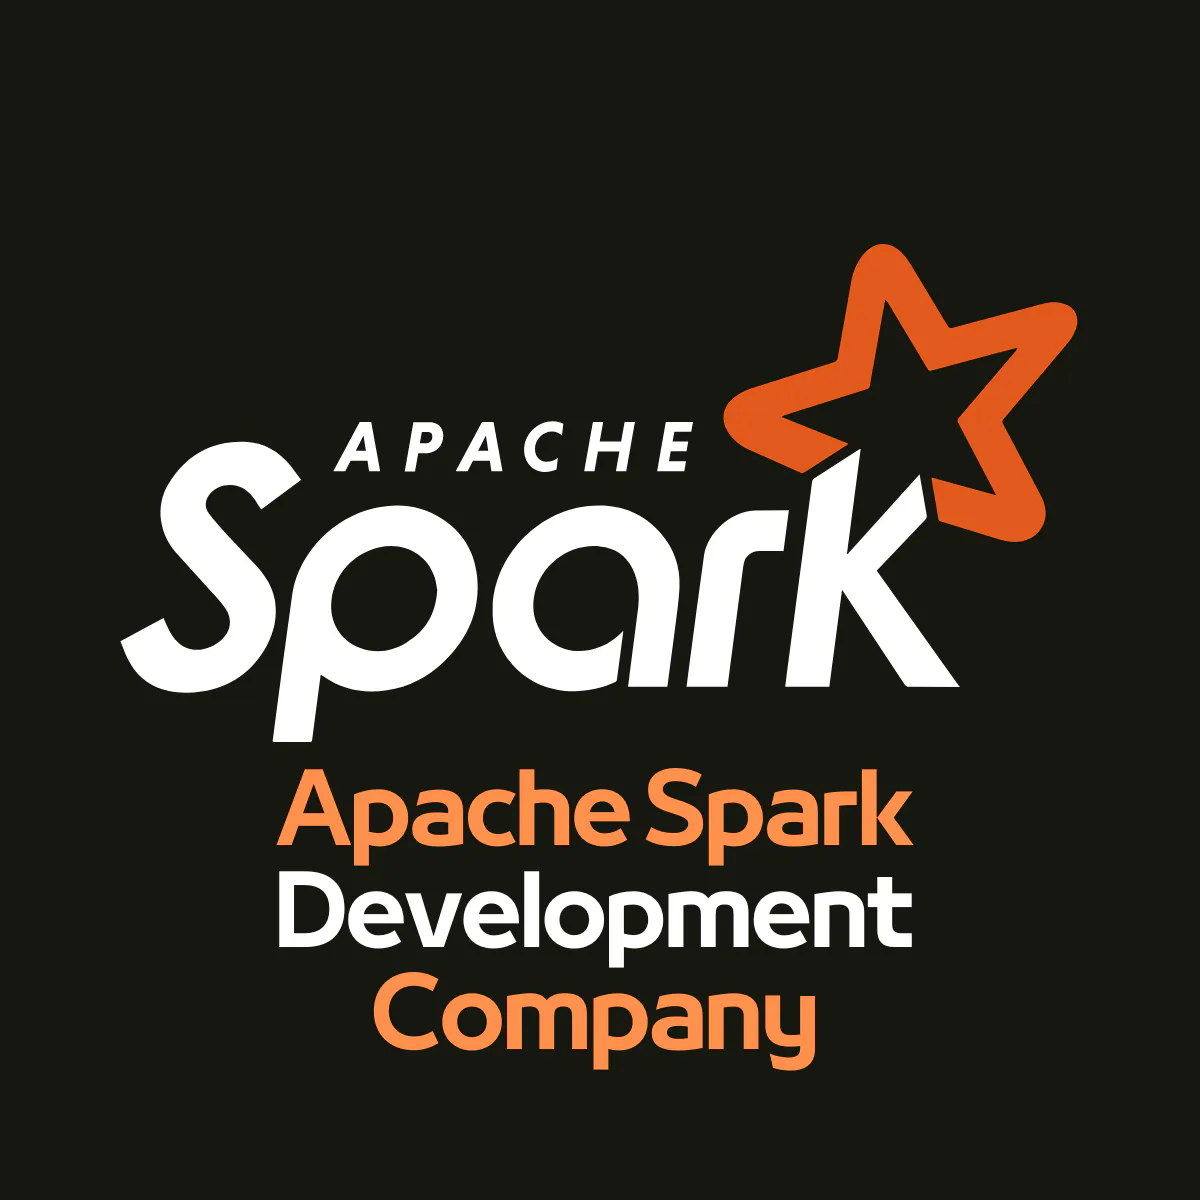 Apache Spark Development